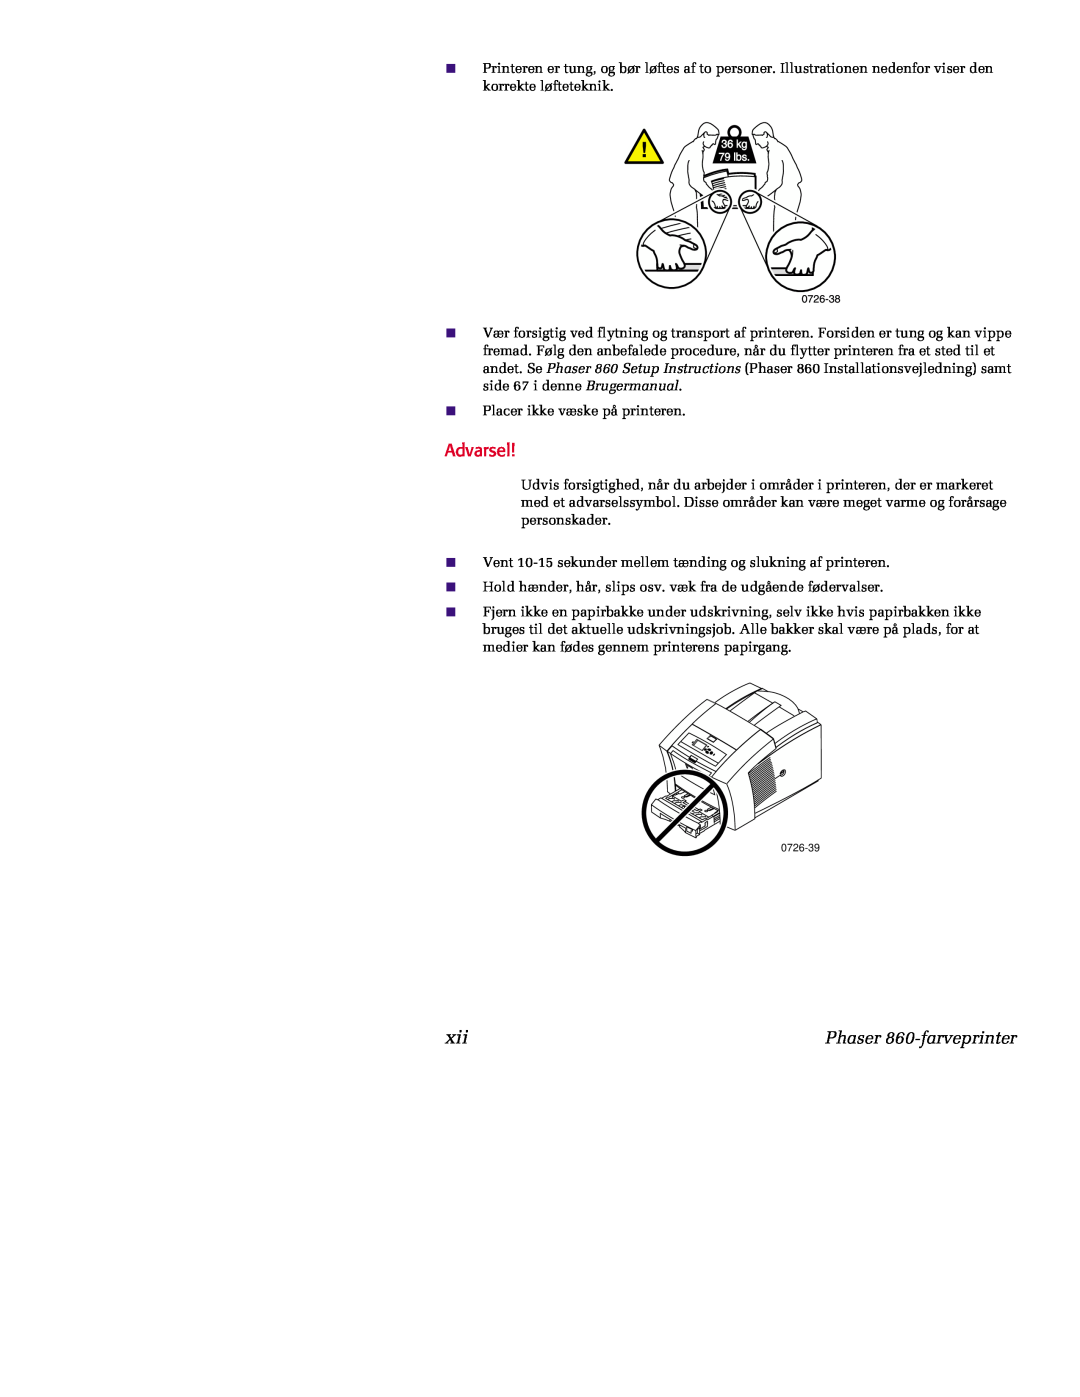 Tektronix manual Advarsel, Phaser 860-farveprinter, Placer ikke væske på printeren 